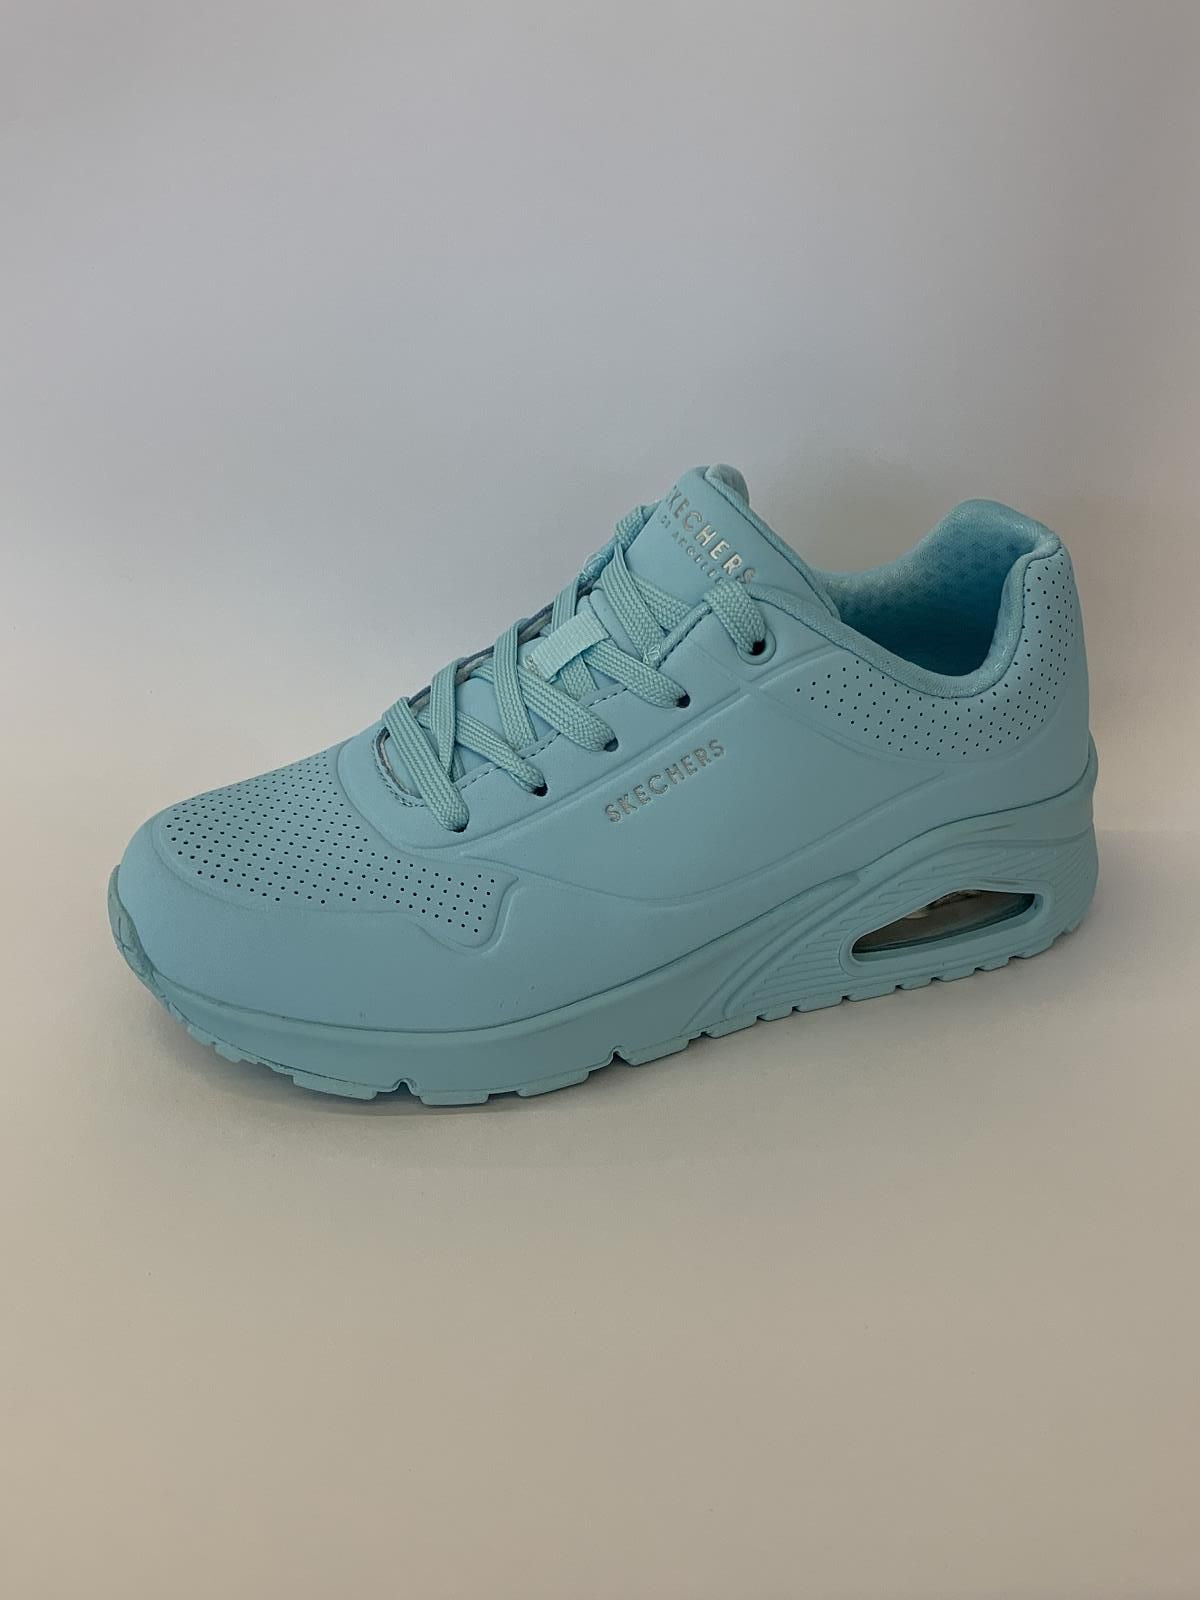 monster droefheid bestellen Skechers Sneaker Blauw Licht dames (Runner AirMax pastel - 73690) -  Schoenen Luca